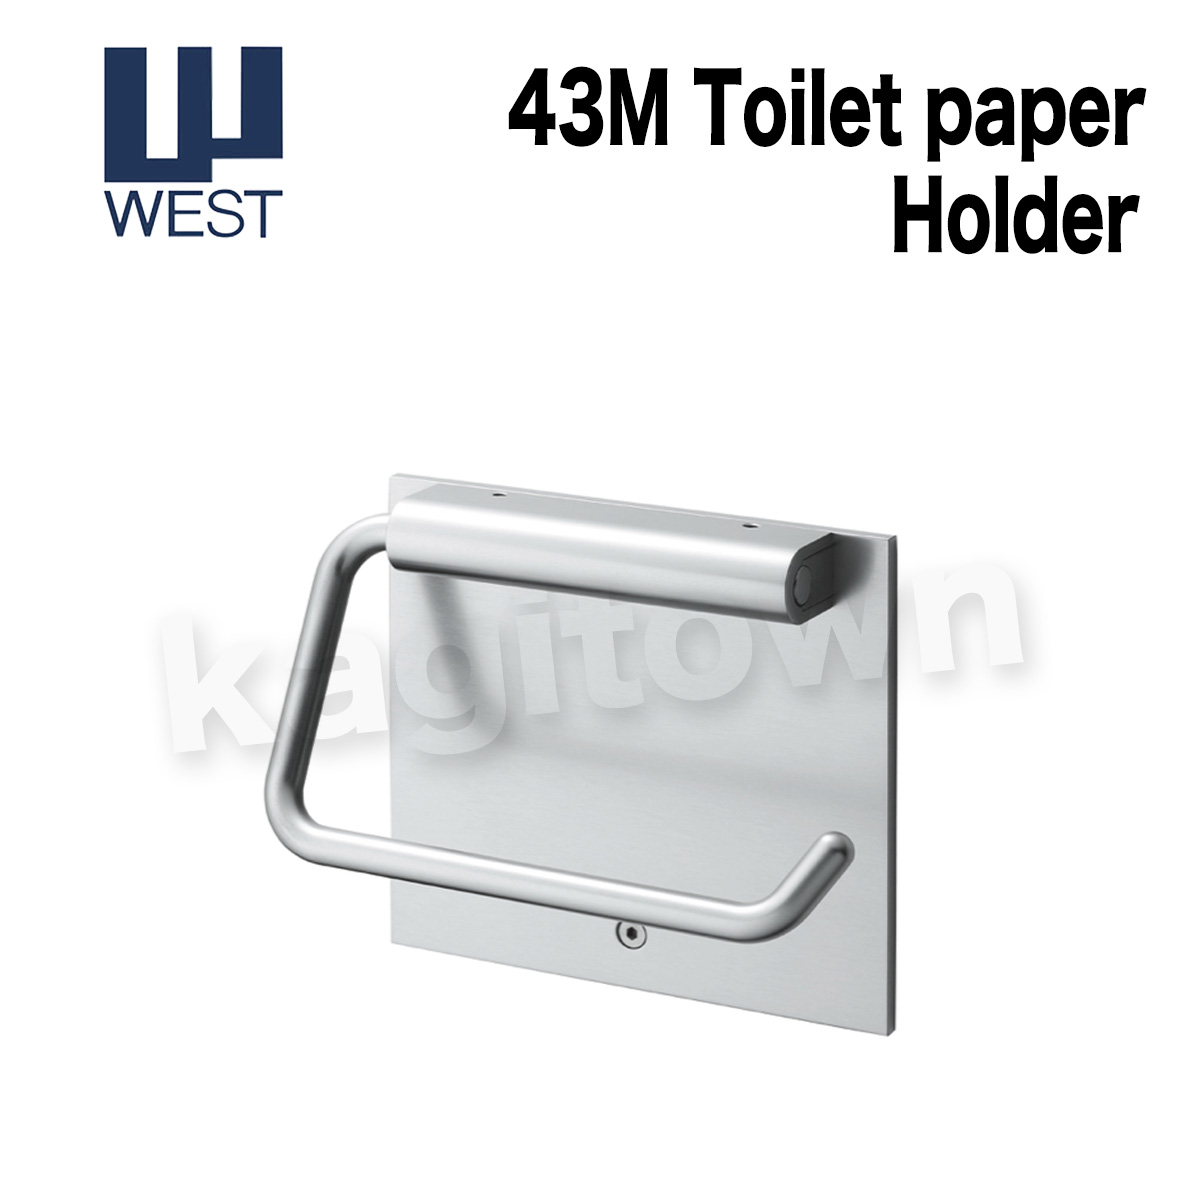 WEST 【ウエスト】タオルリング[WEST-43M]gg43M Toilet paper Holder・シリンダーの格安ネット通販【鍵TOWN】